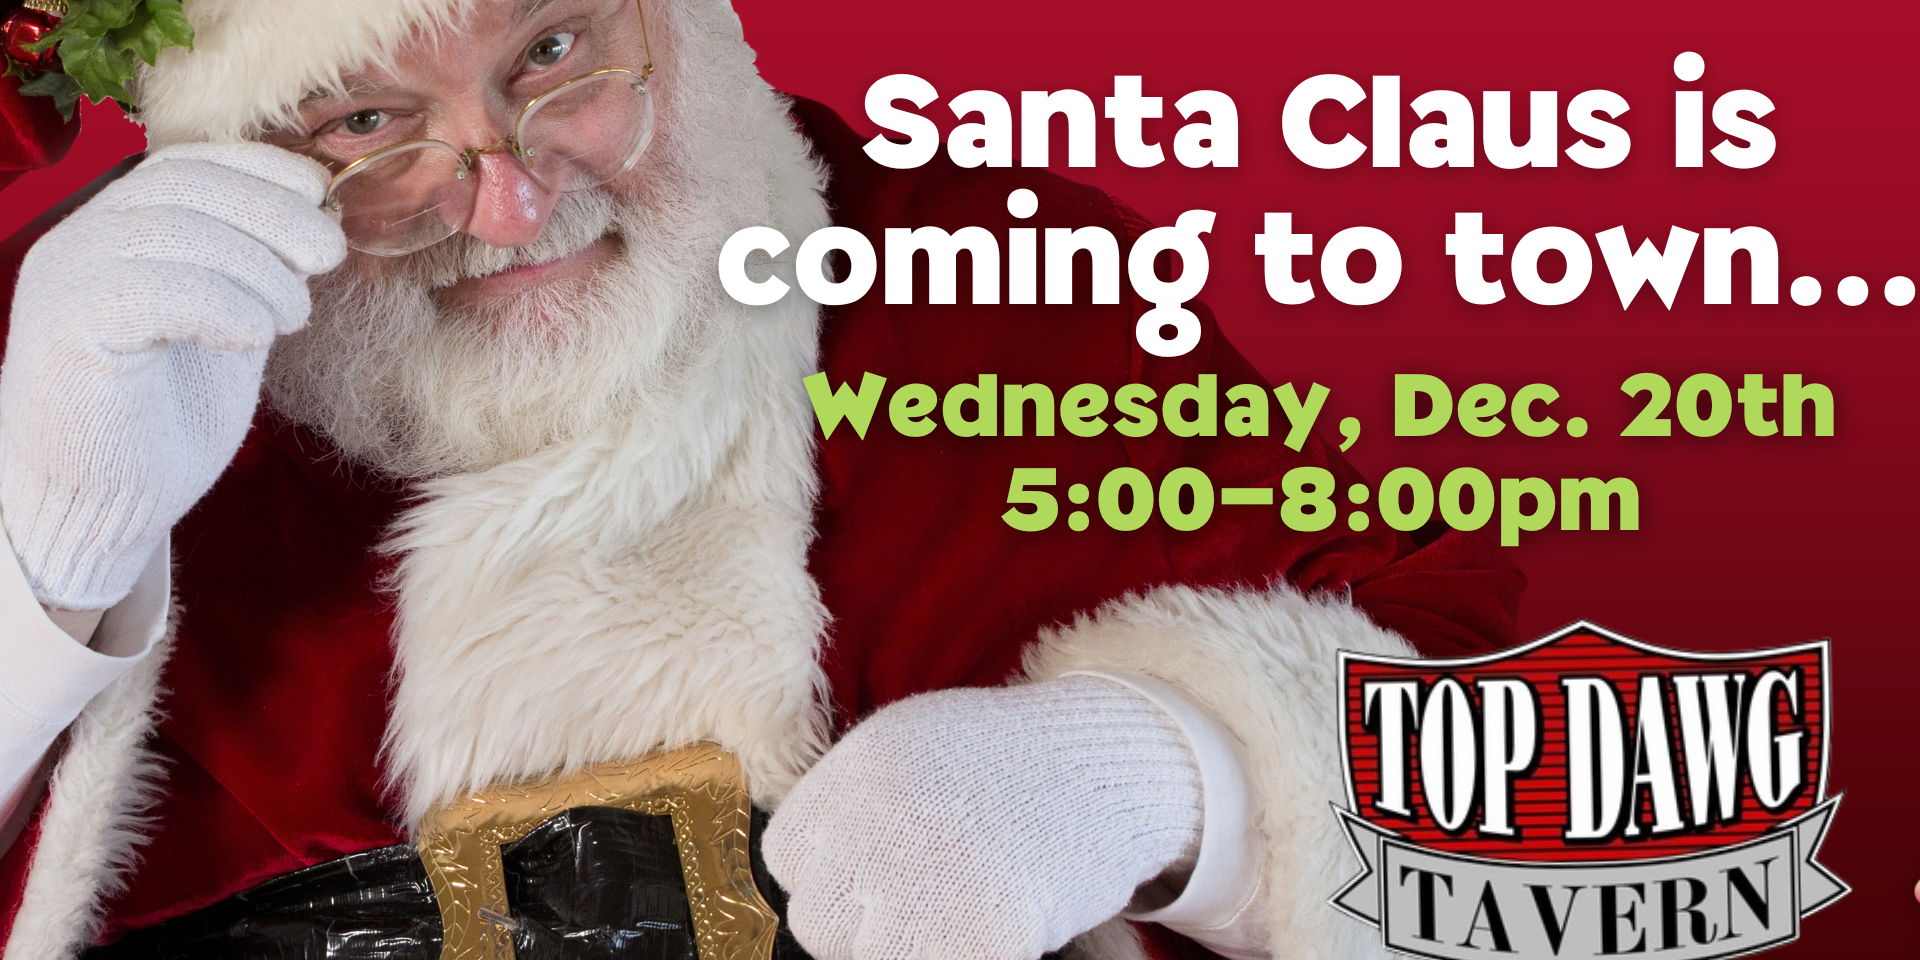 Santa Claus at Top Dawg Tavern promotional image